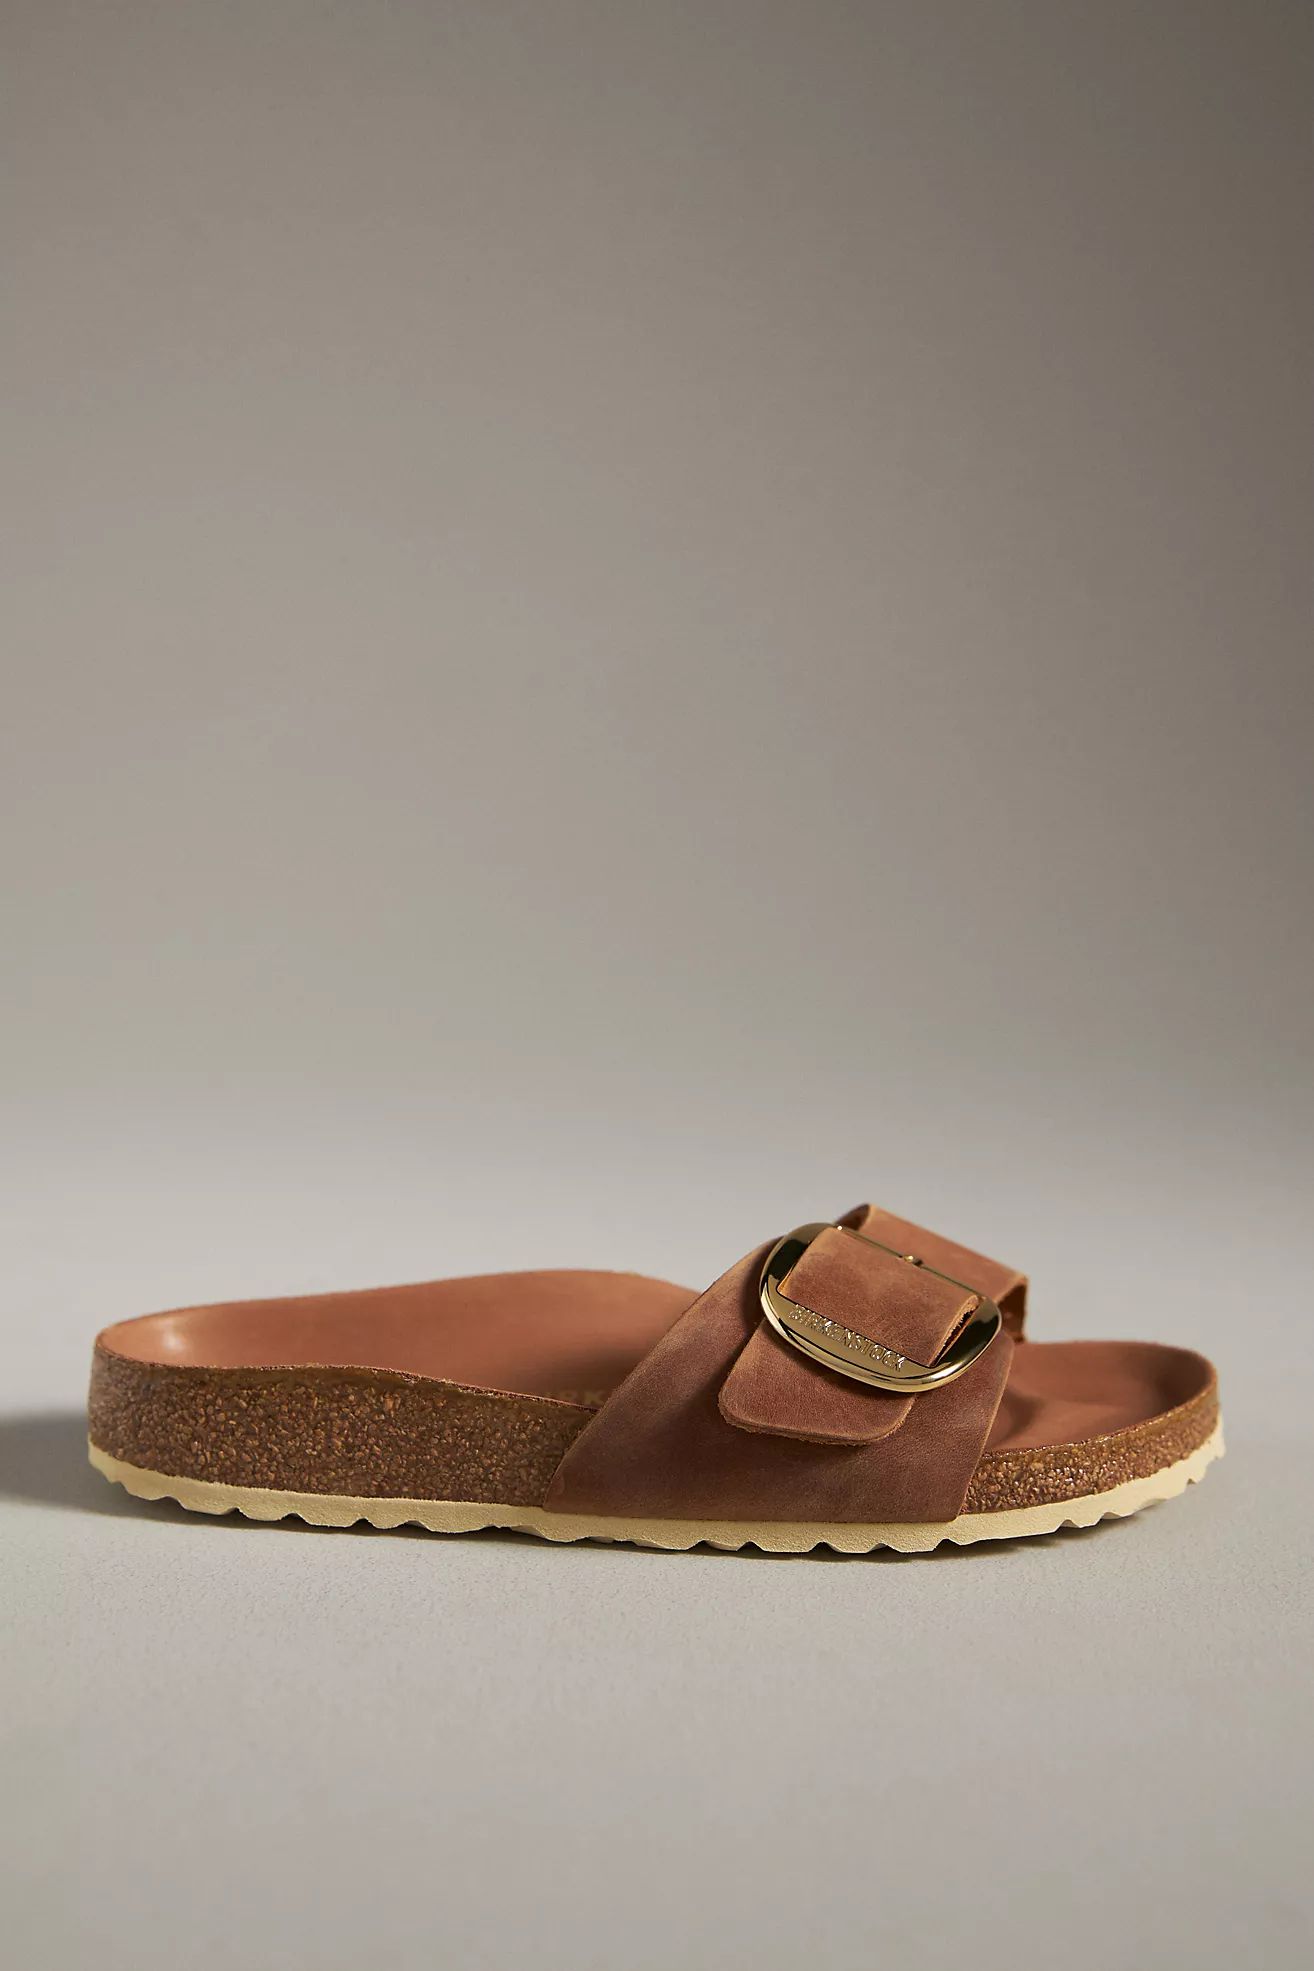 Birkenstock Madrid Big Buckle Oiled Leather Sandals | Anthropologie (US)